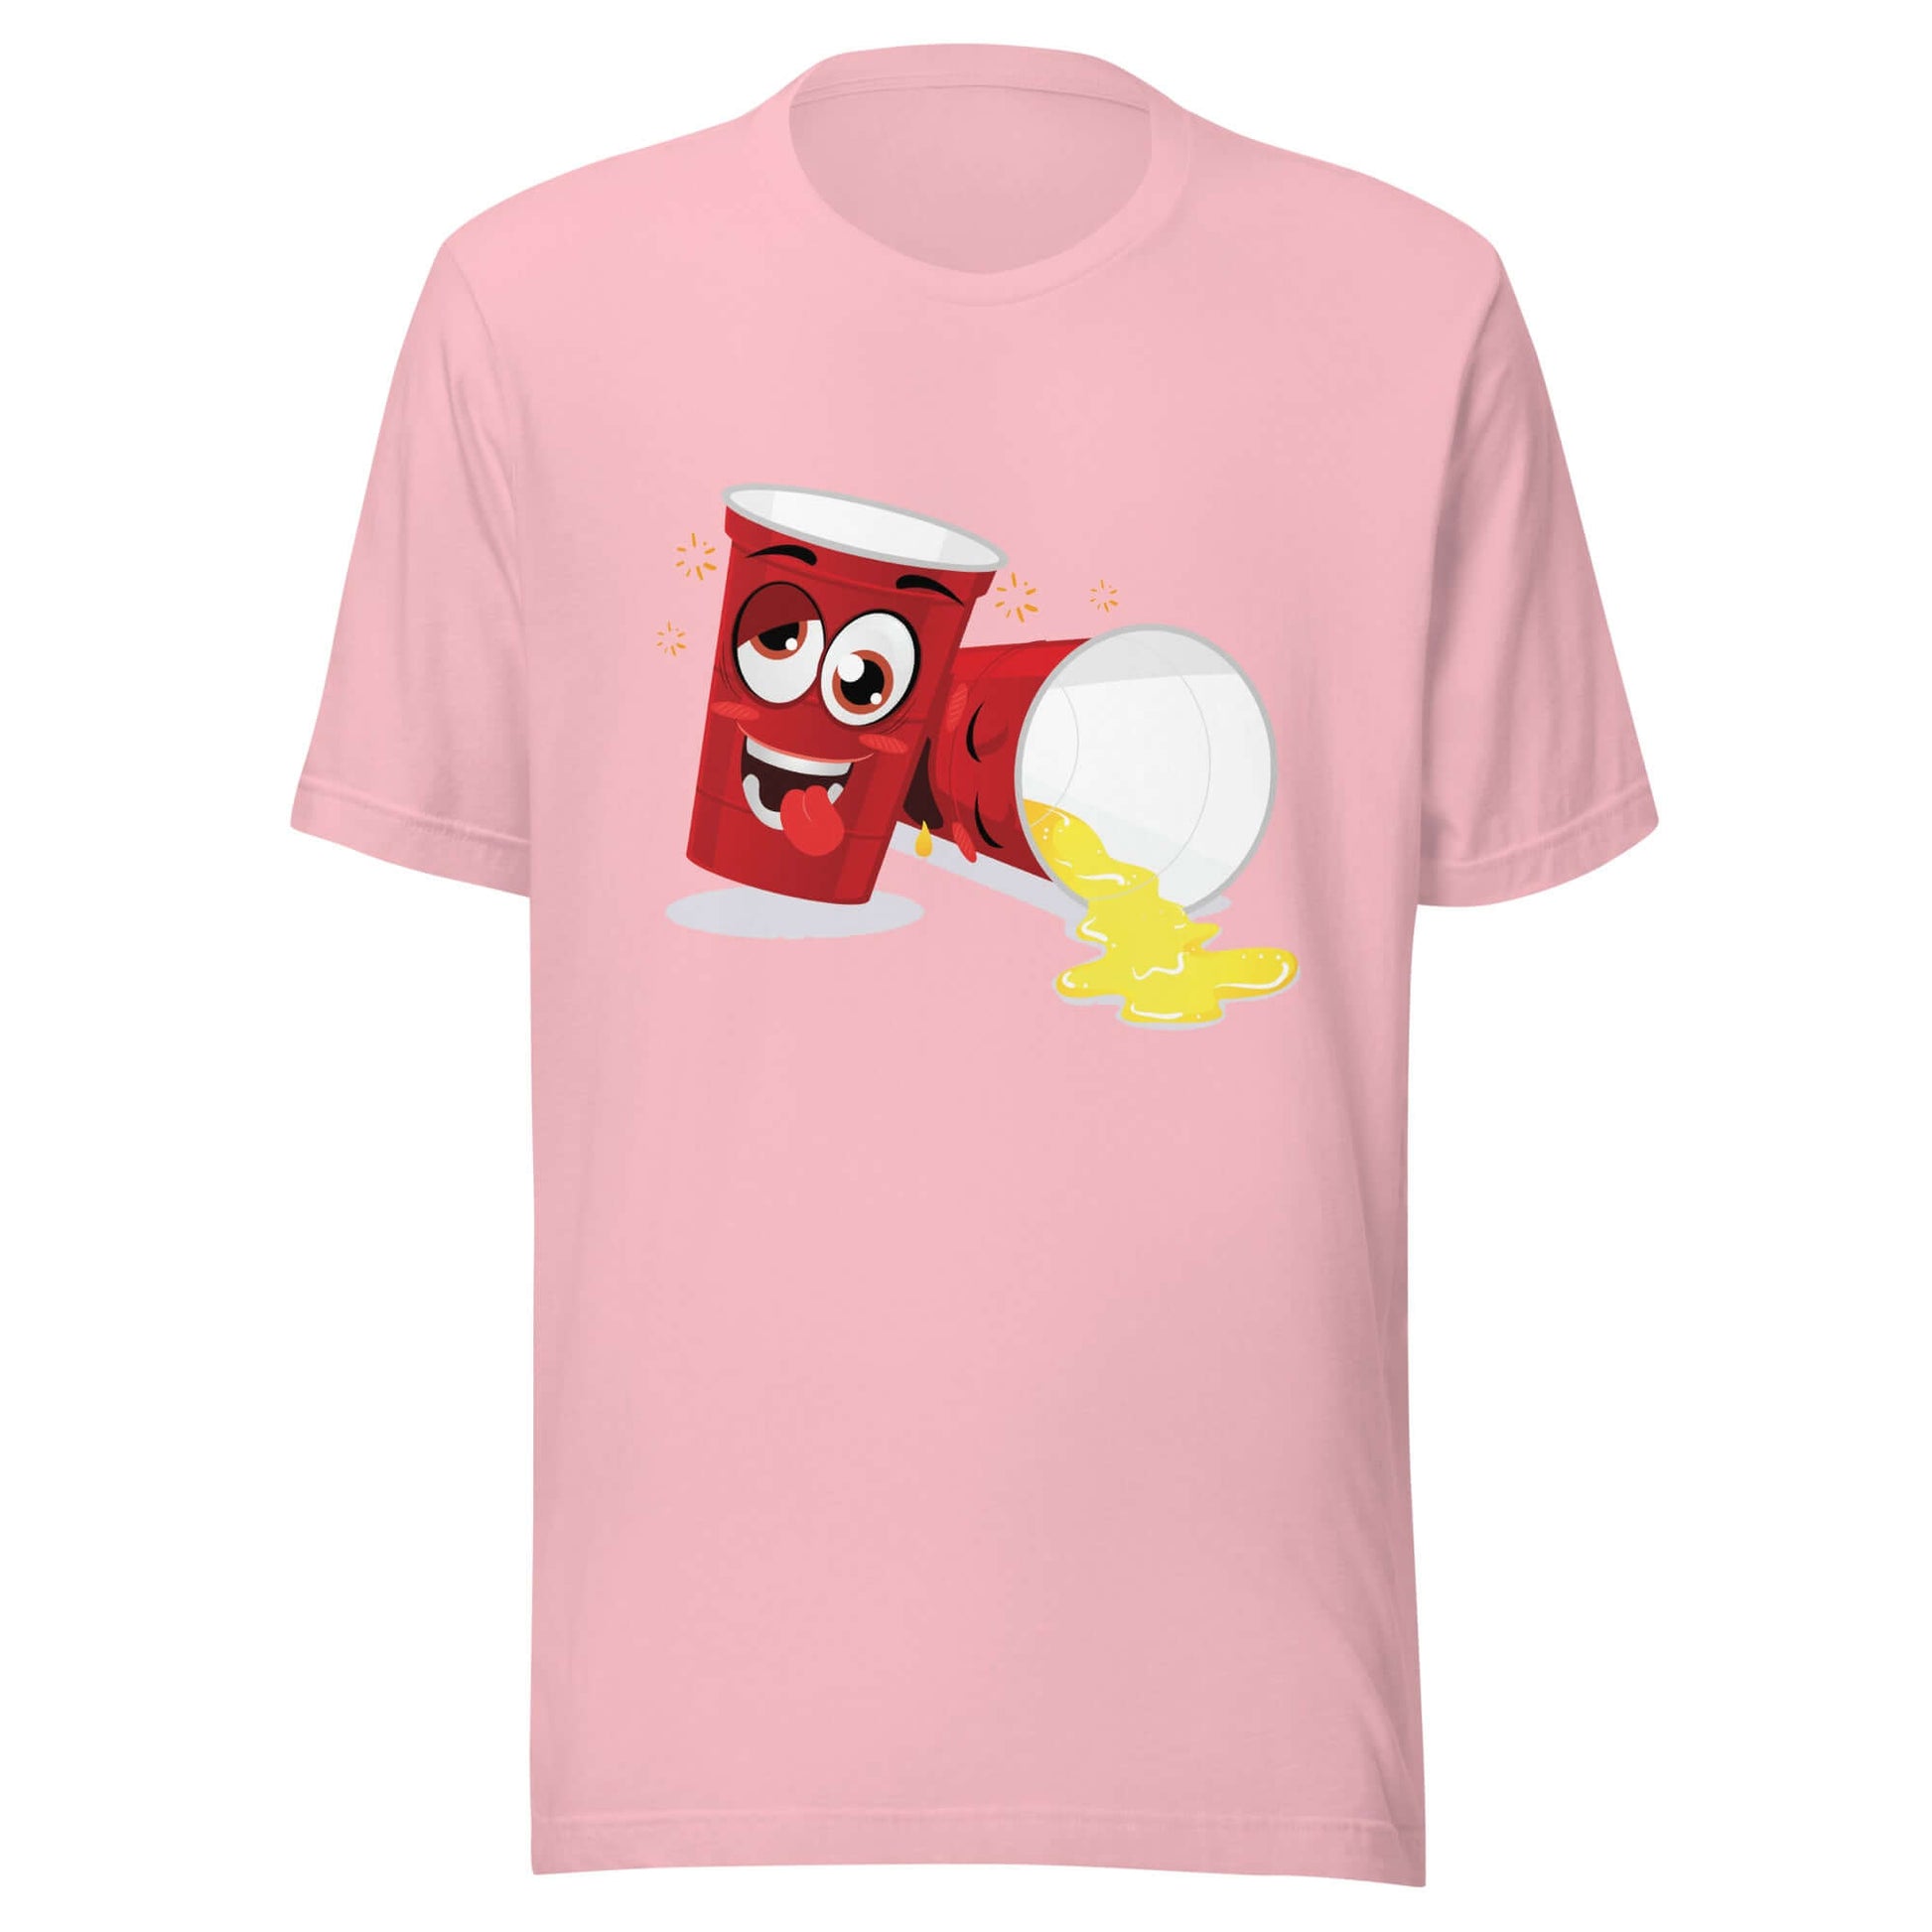 Beer Pong Cups Drunk - Unisex t-shirt - Pink